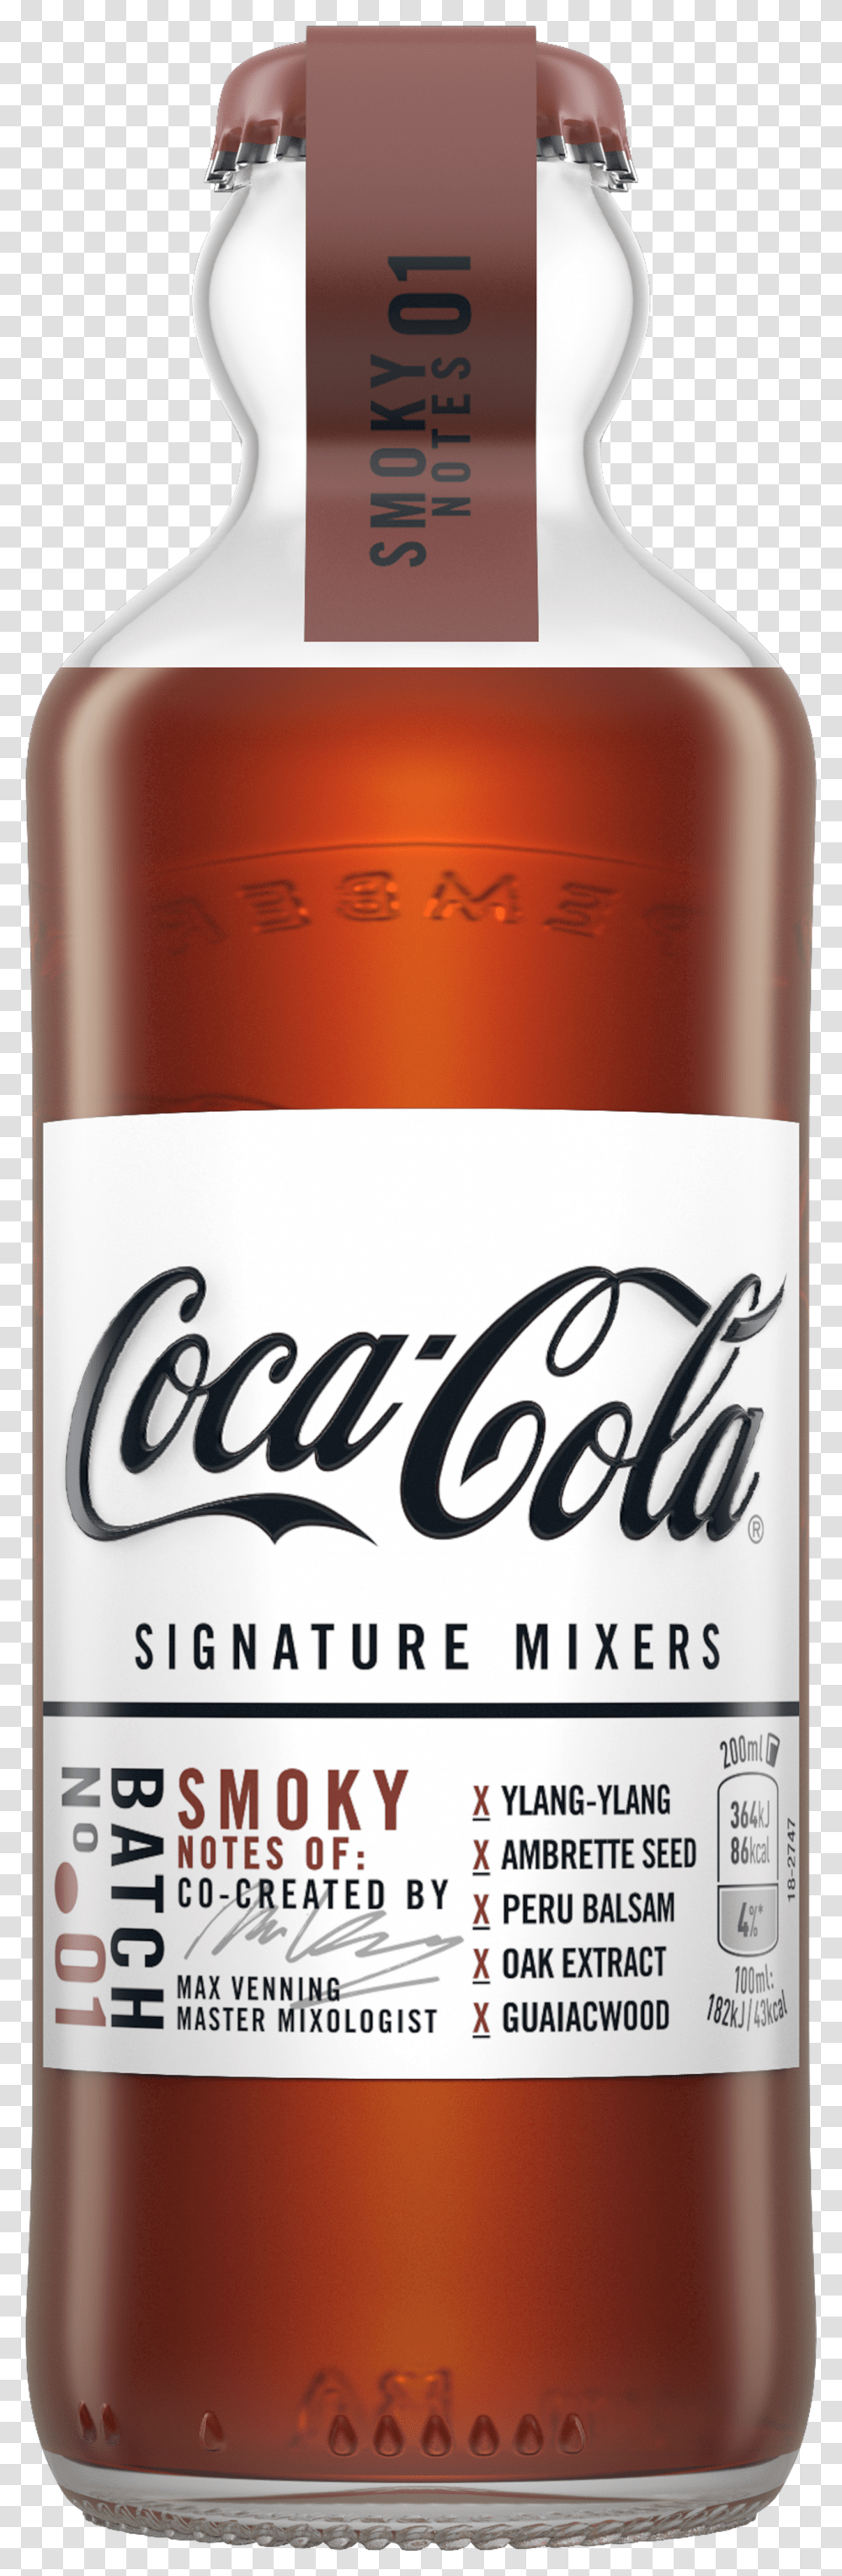 Mixers signature coca cola Coke Signature